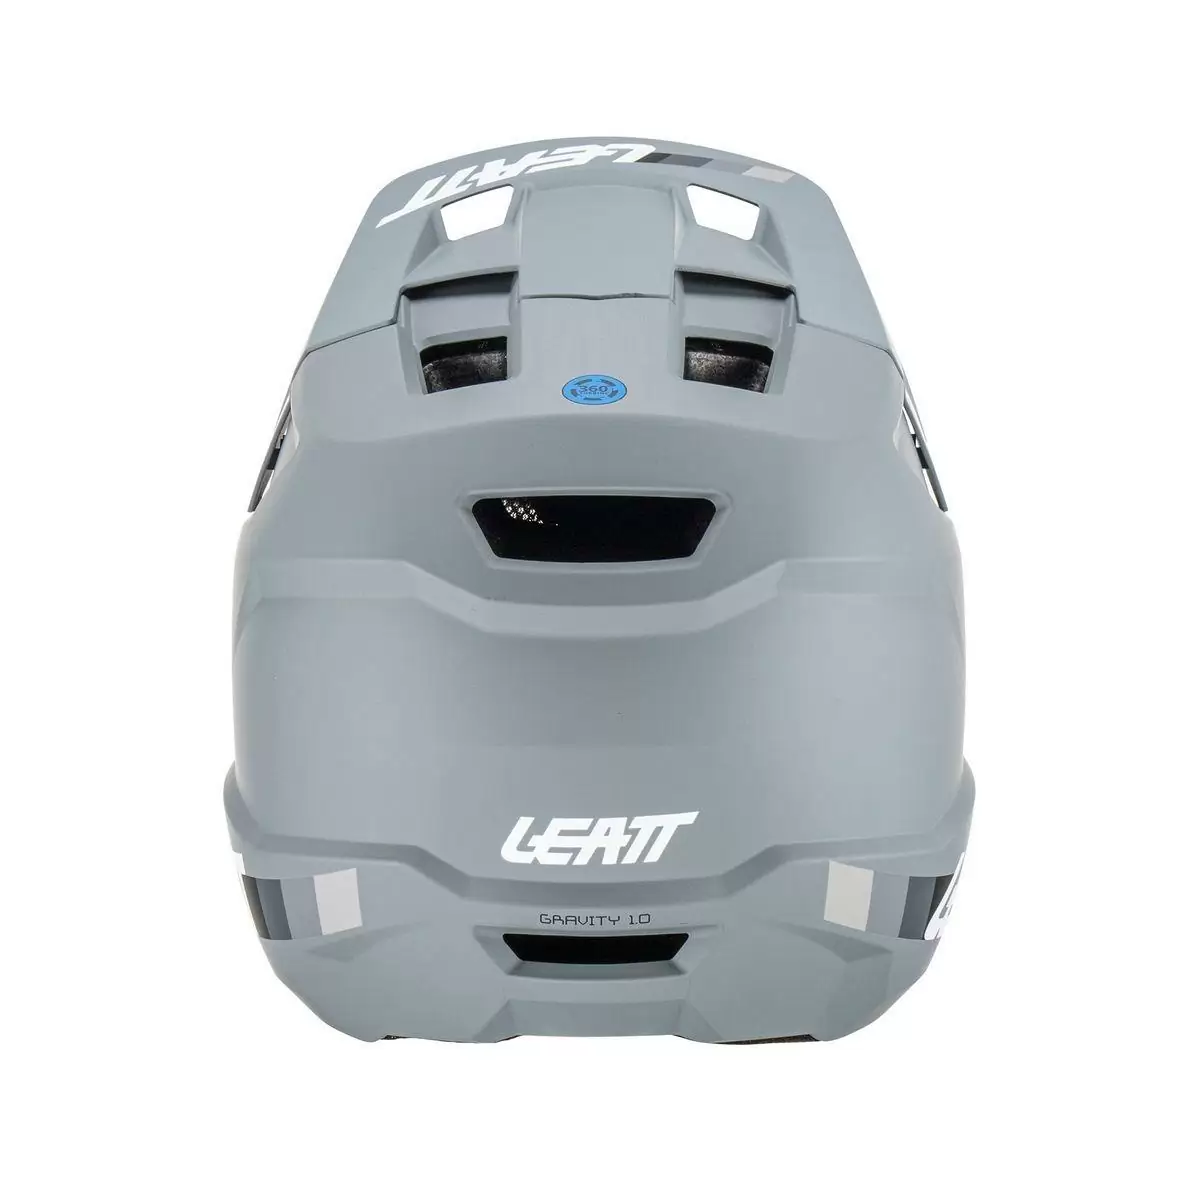 Gravity 1.0 MTB Fullface Helmet Grey Size M (57-58cm) #4